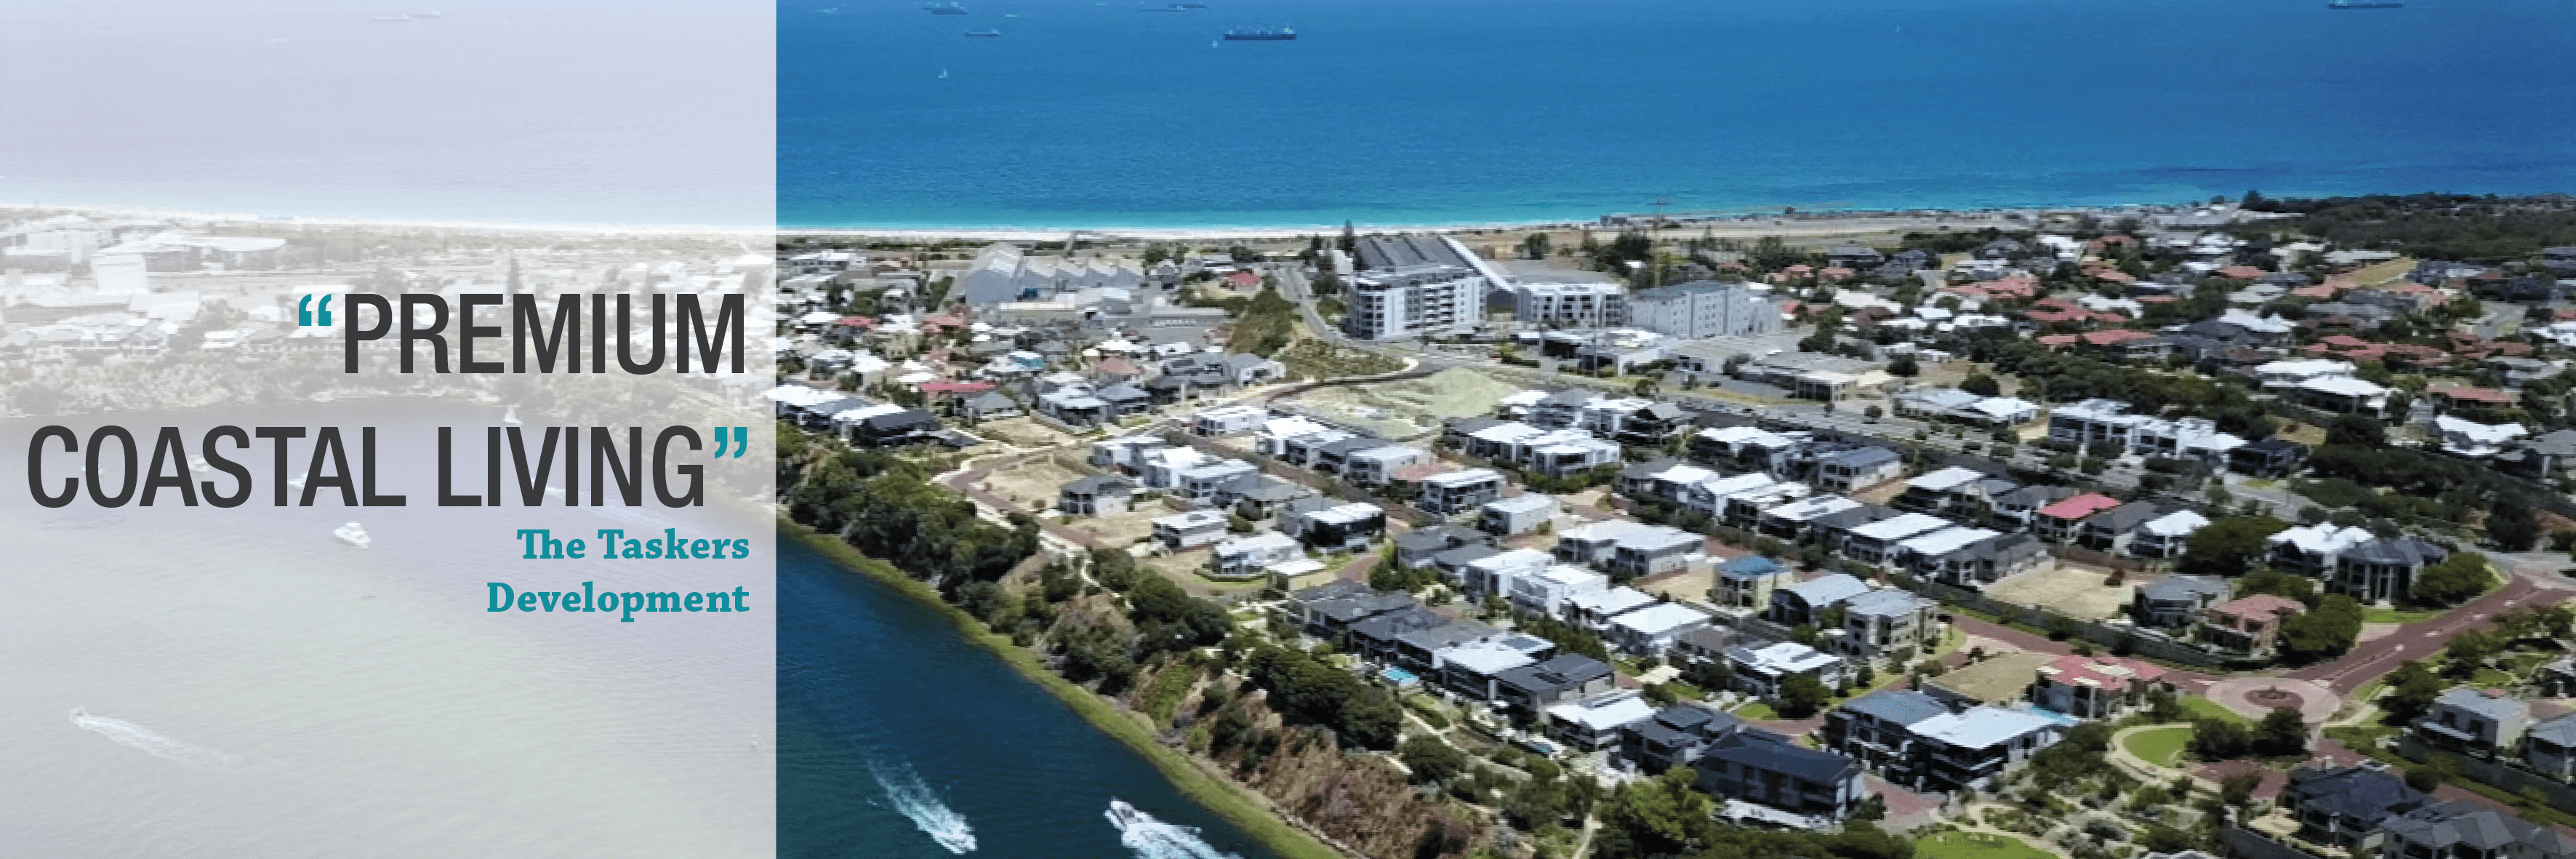 Coastal Living - Taskers Development